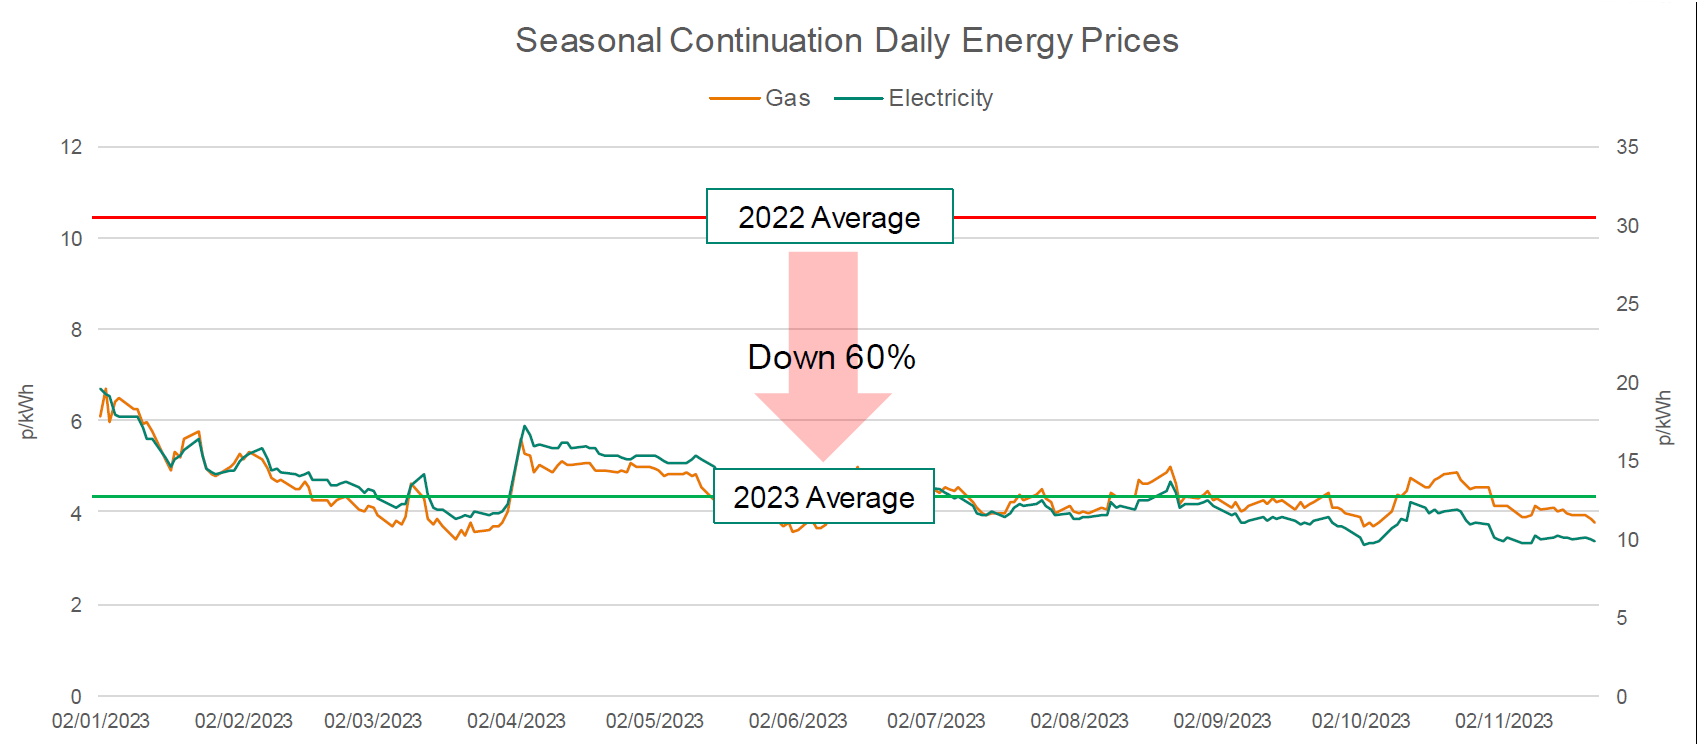 Average Energy Prices in 2022 vs. 2023